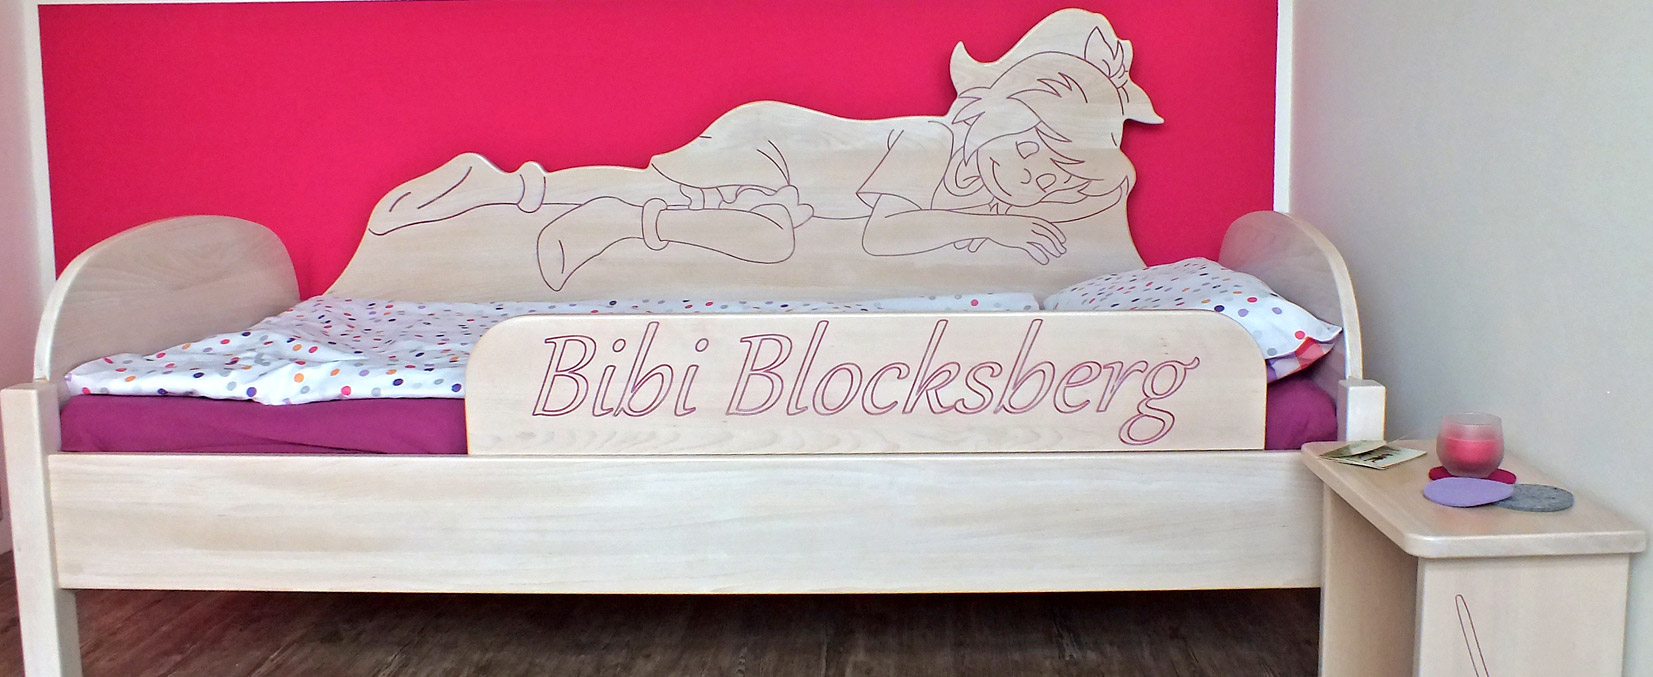 Bibi-Blocksberg-Bett